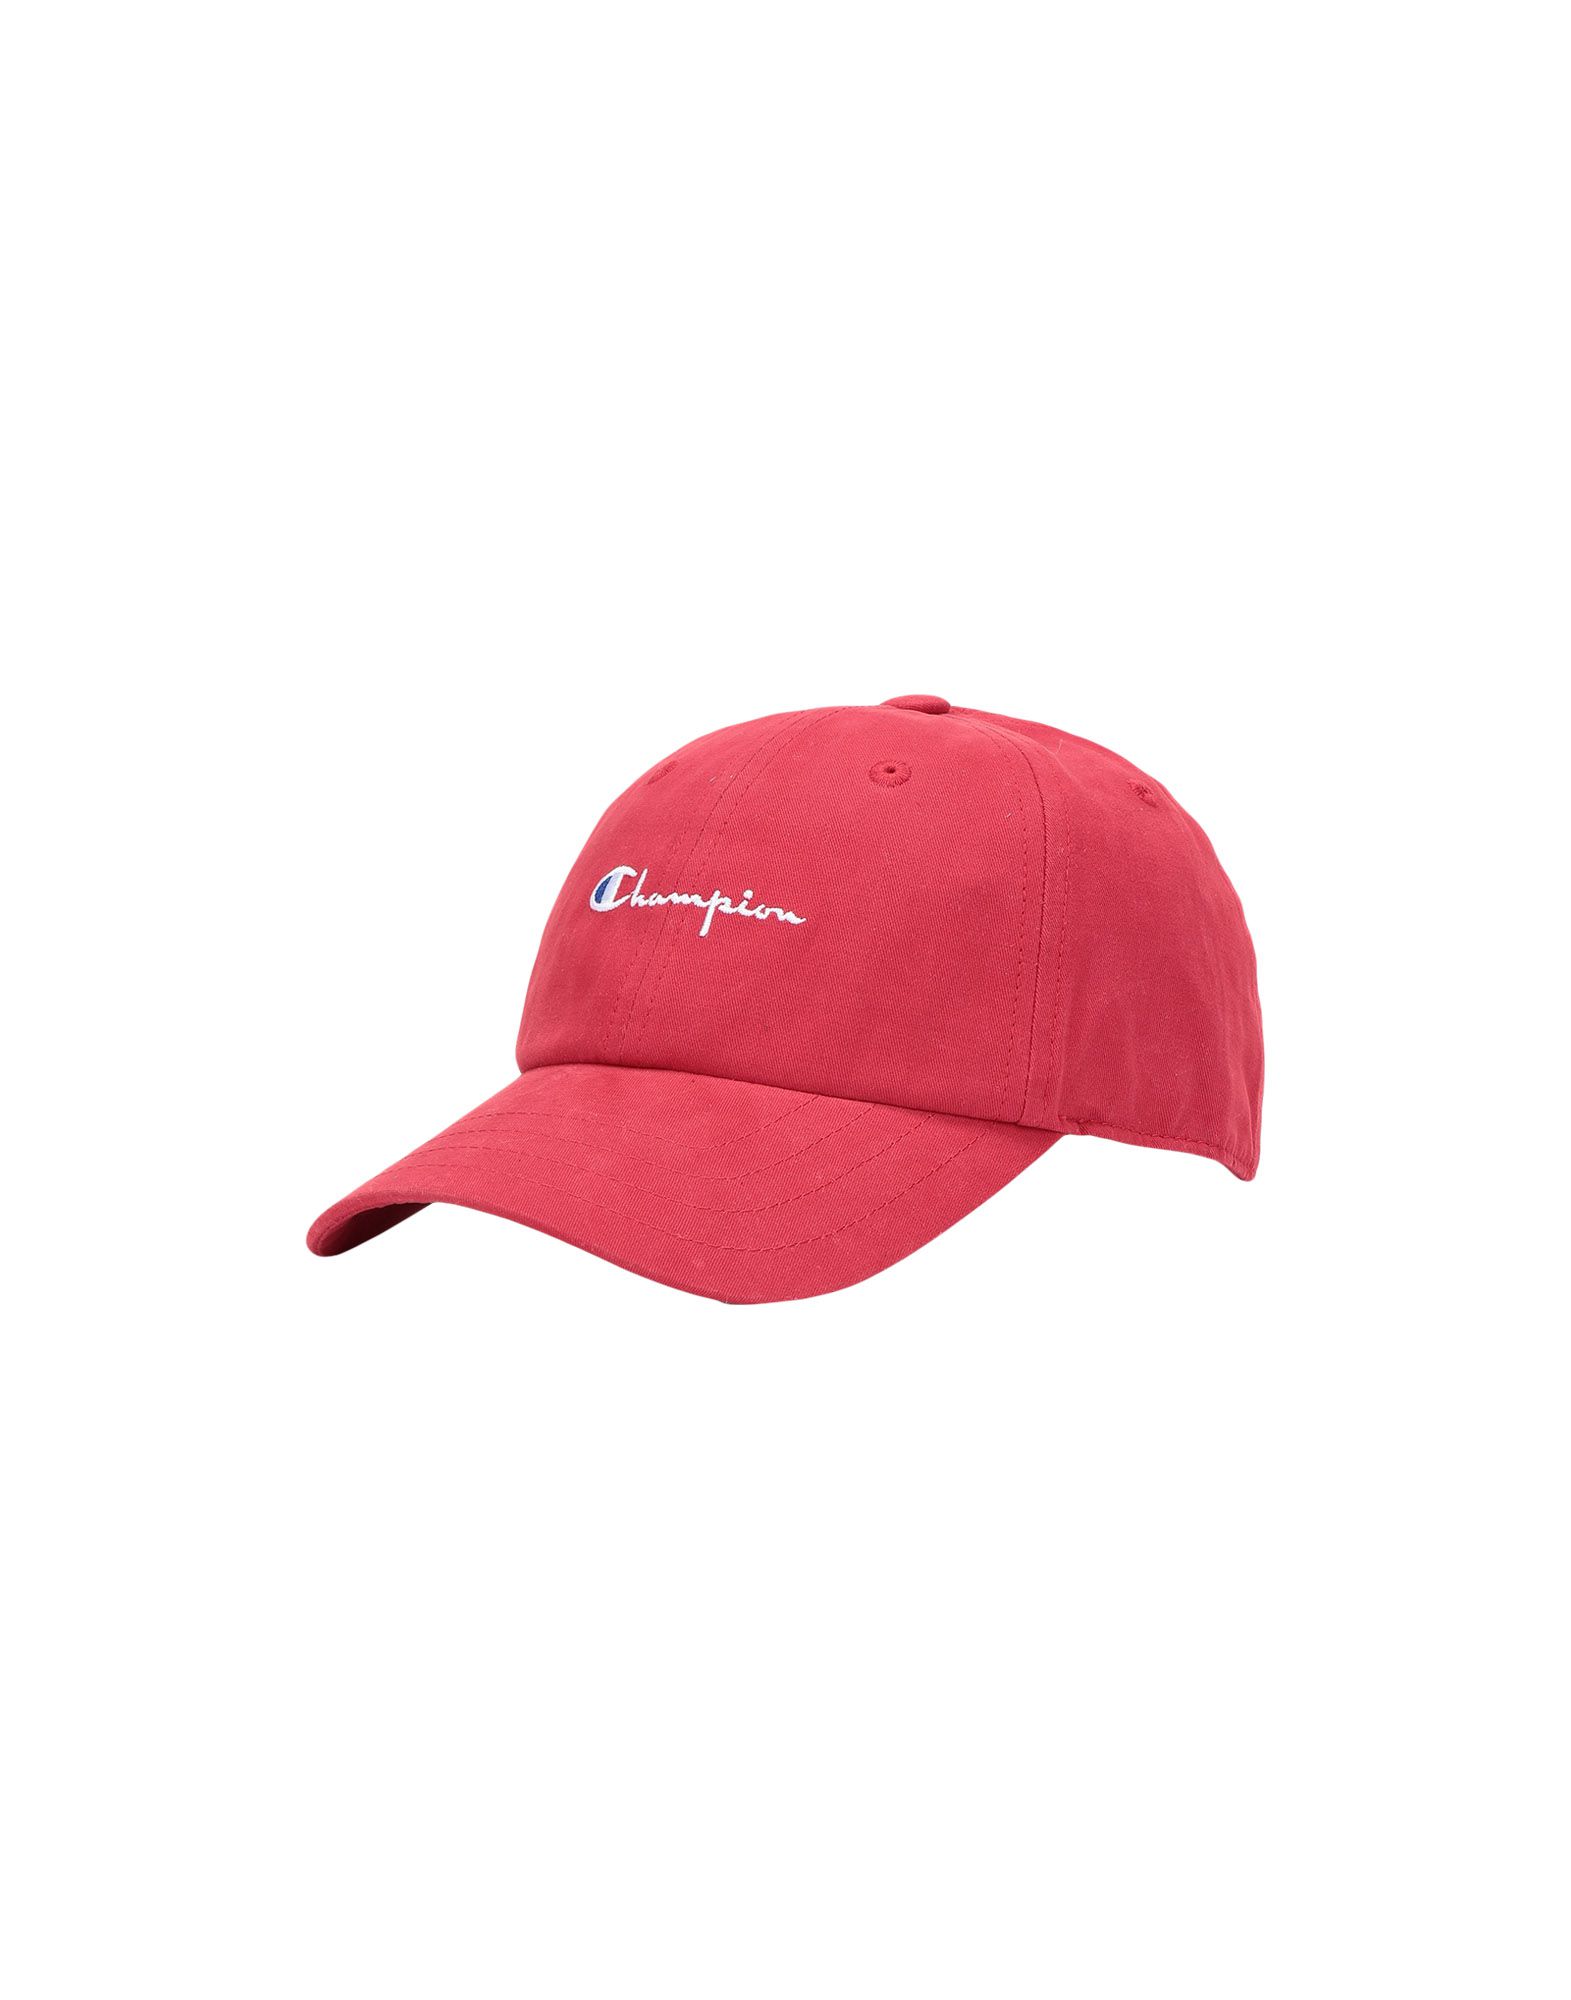 champion hat red